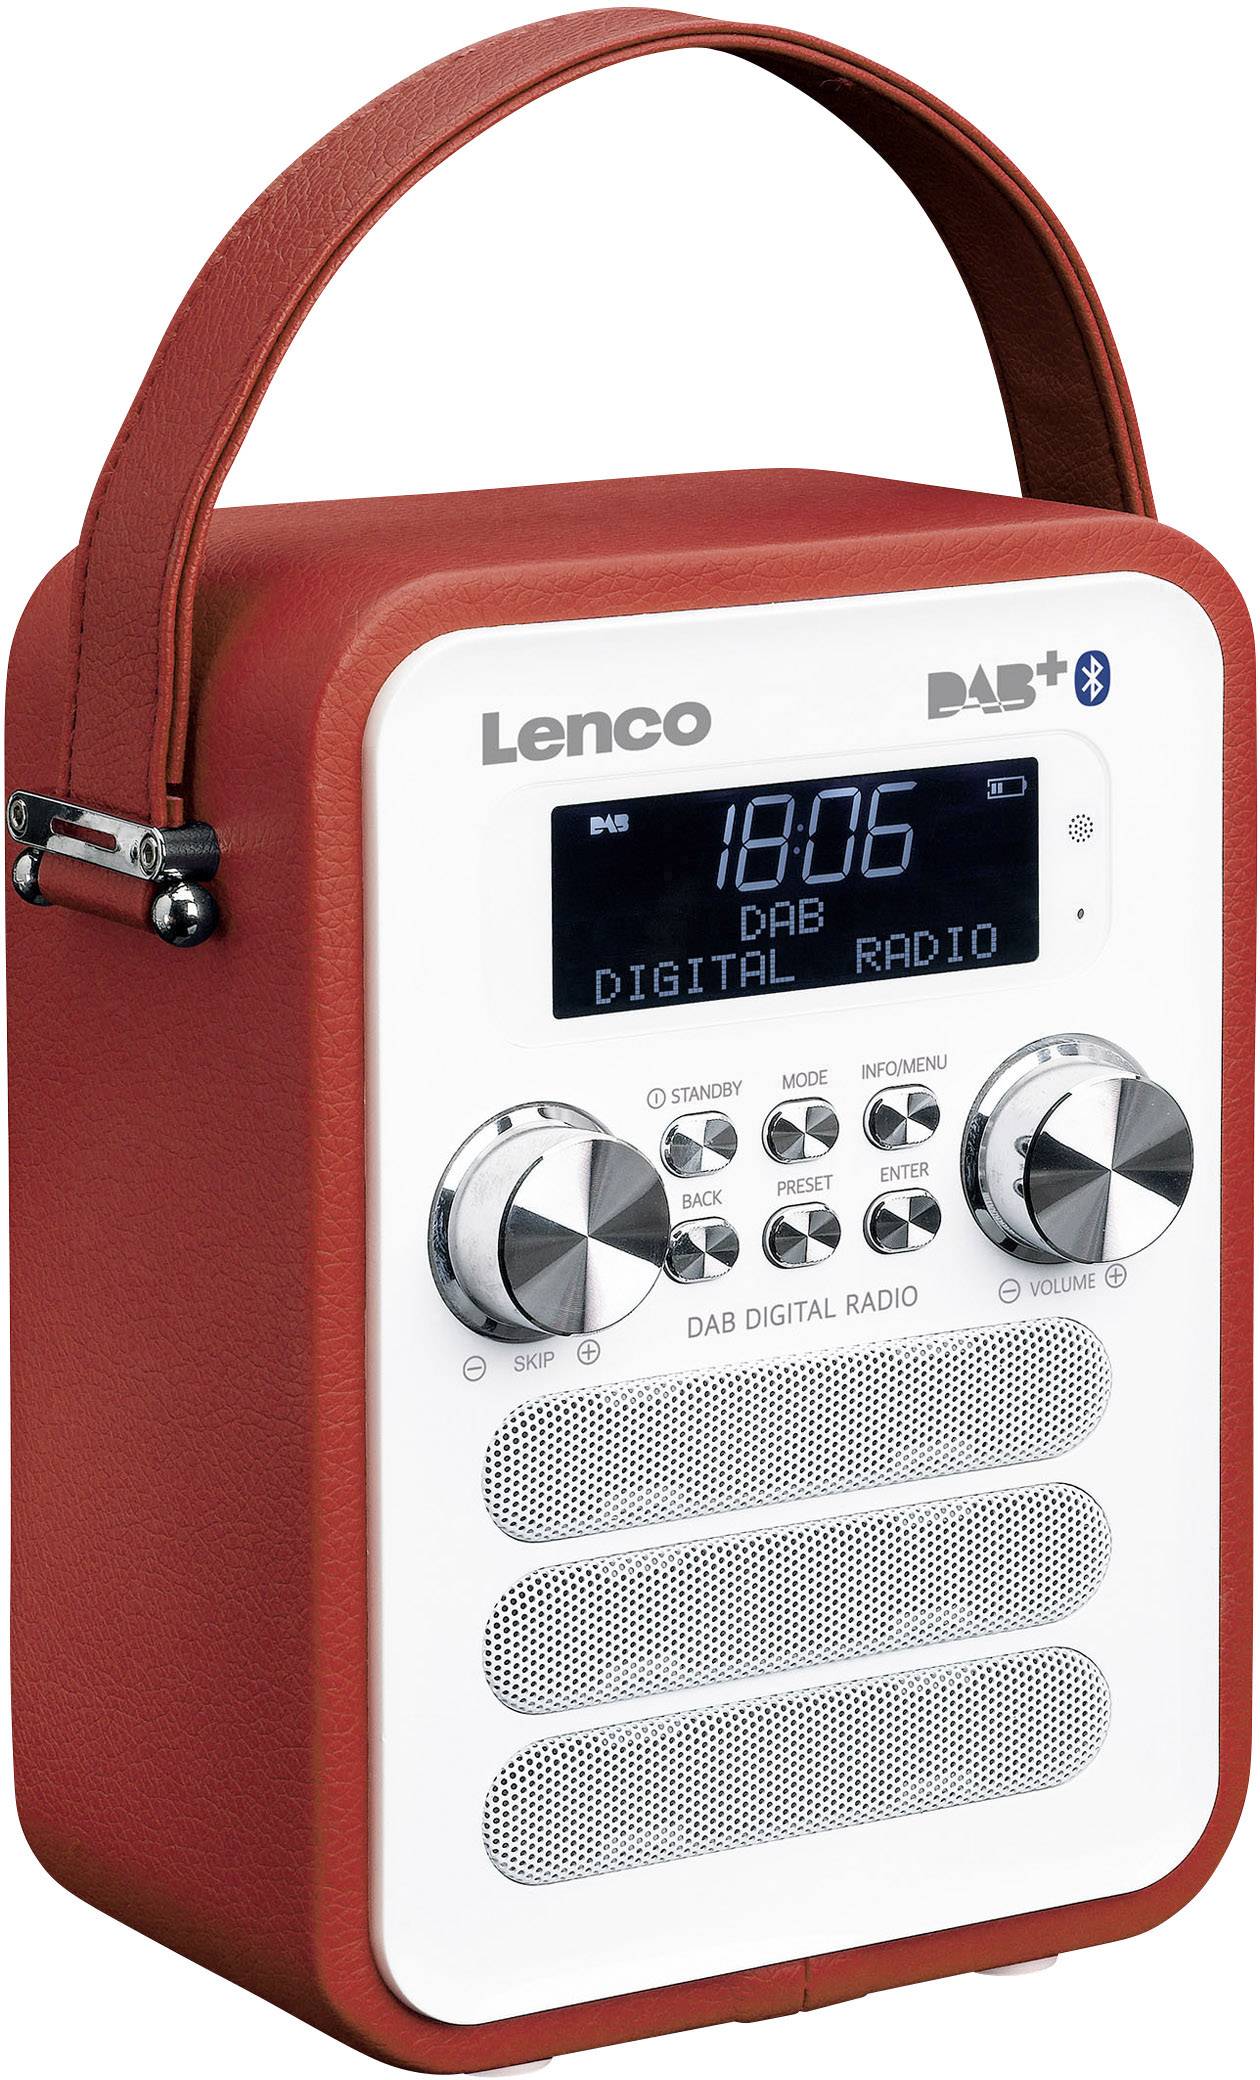 weten Ellendig de jouwe Lenco PDR-050RD Pocket radio DAB+, FM AUX, Bluetooth Battery charger Red |  Conrad.com